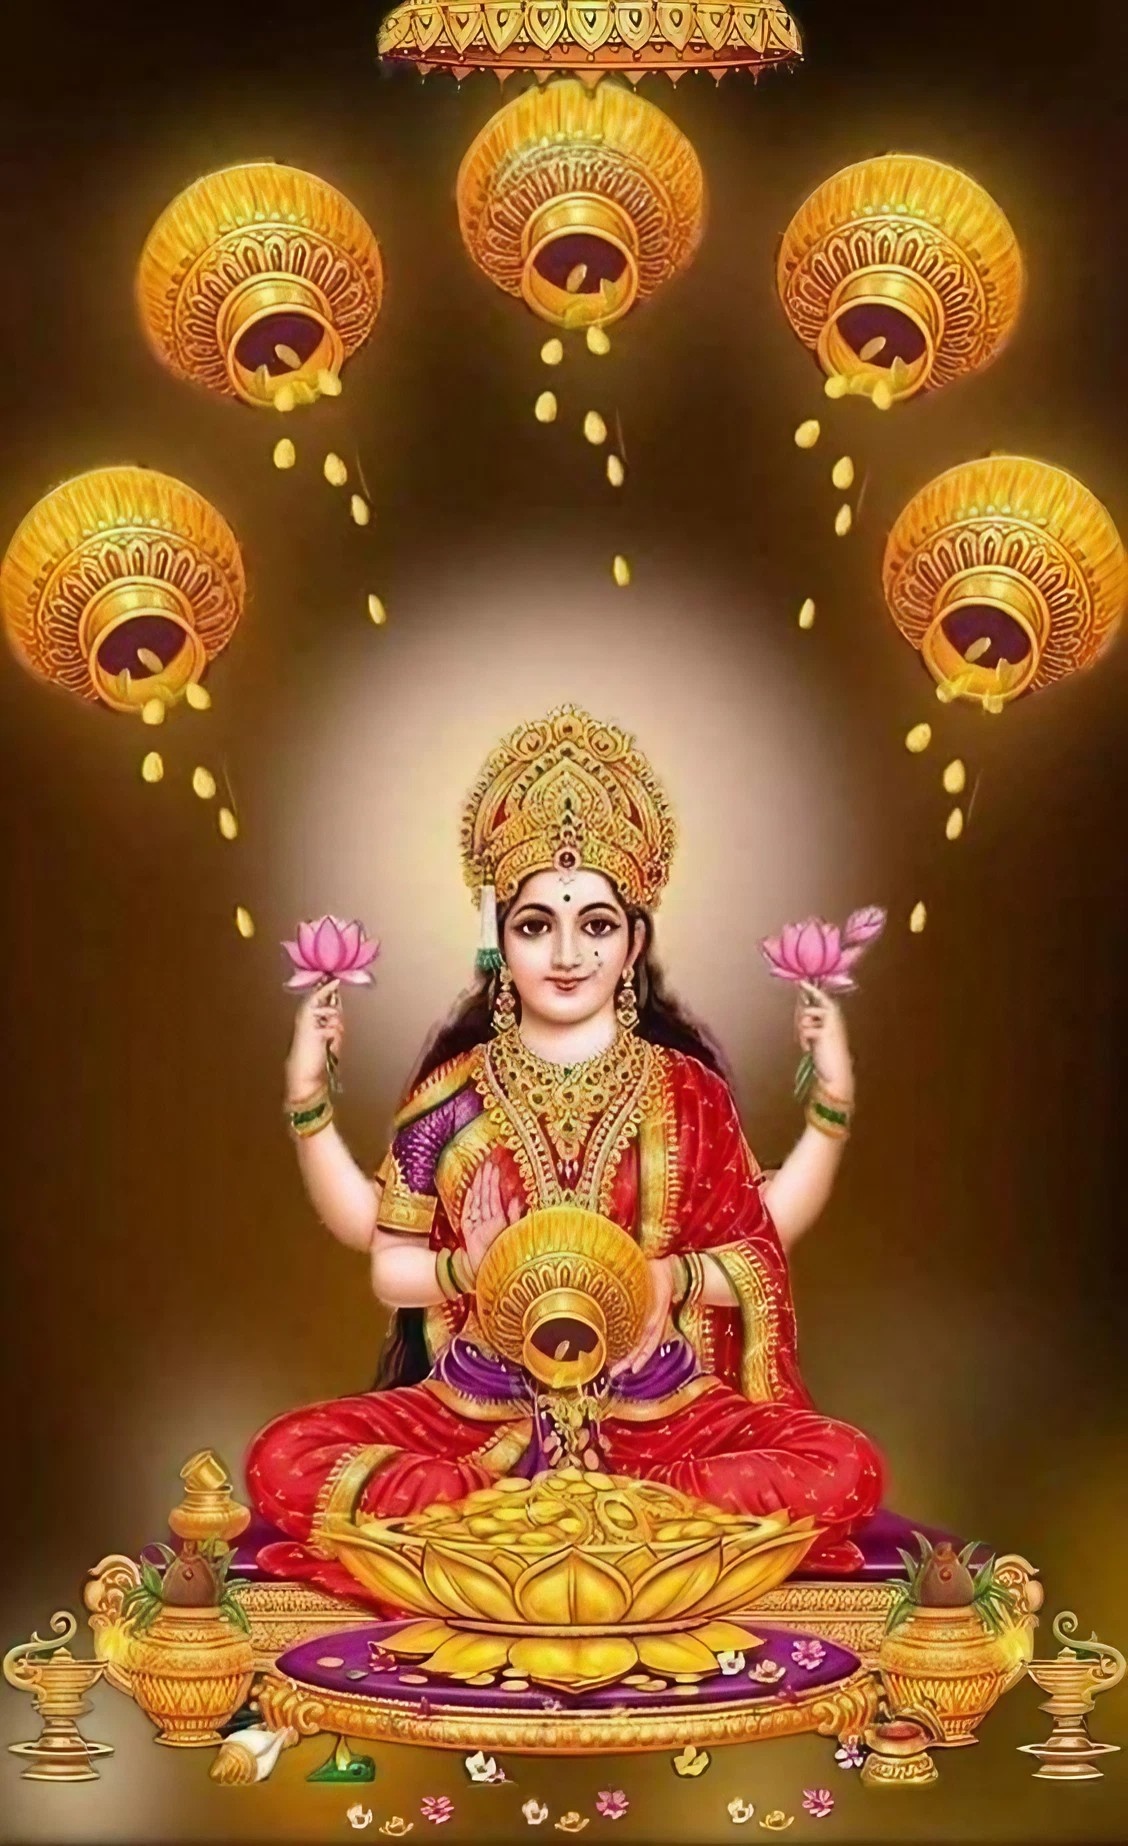 Mahalaxmi Photo - Hindu Goddess